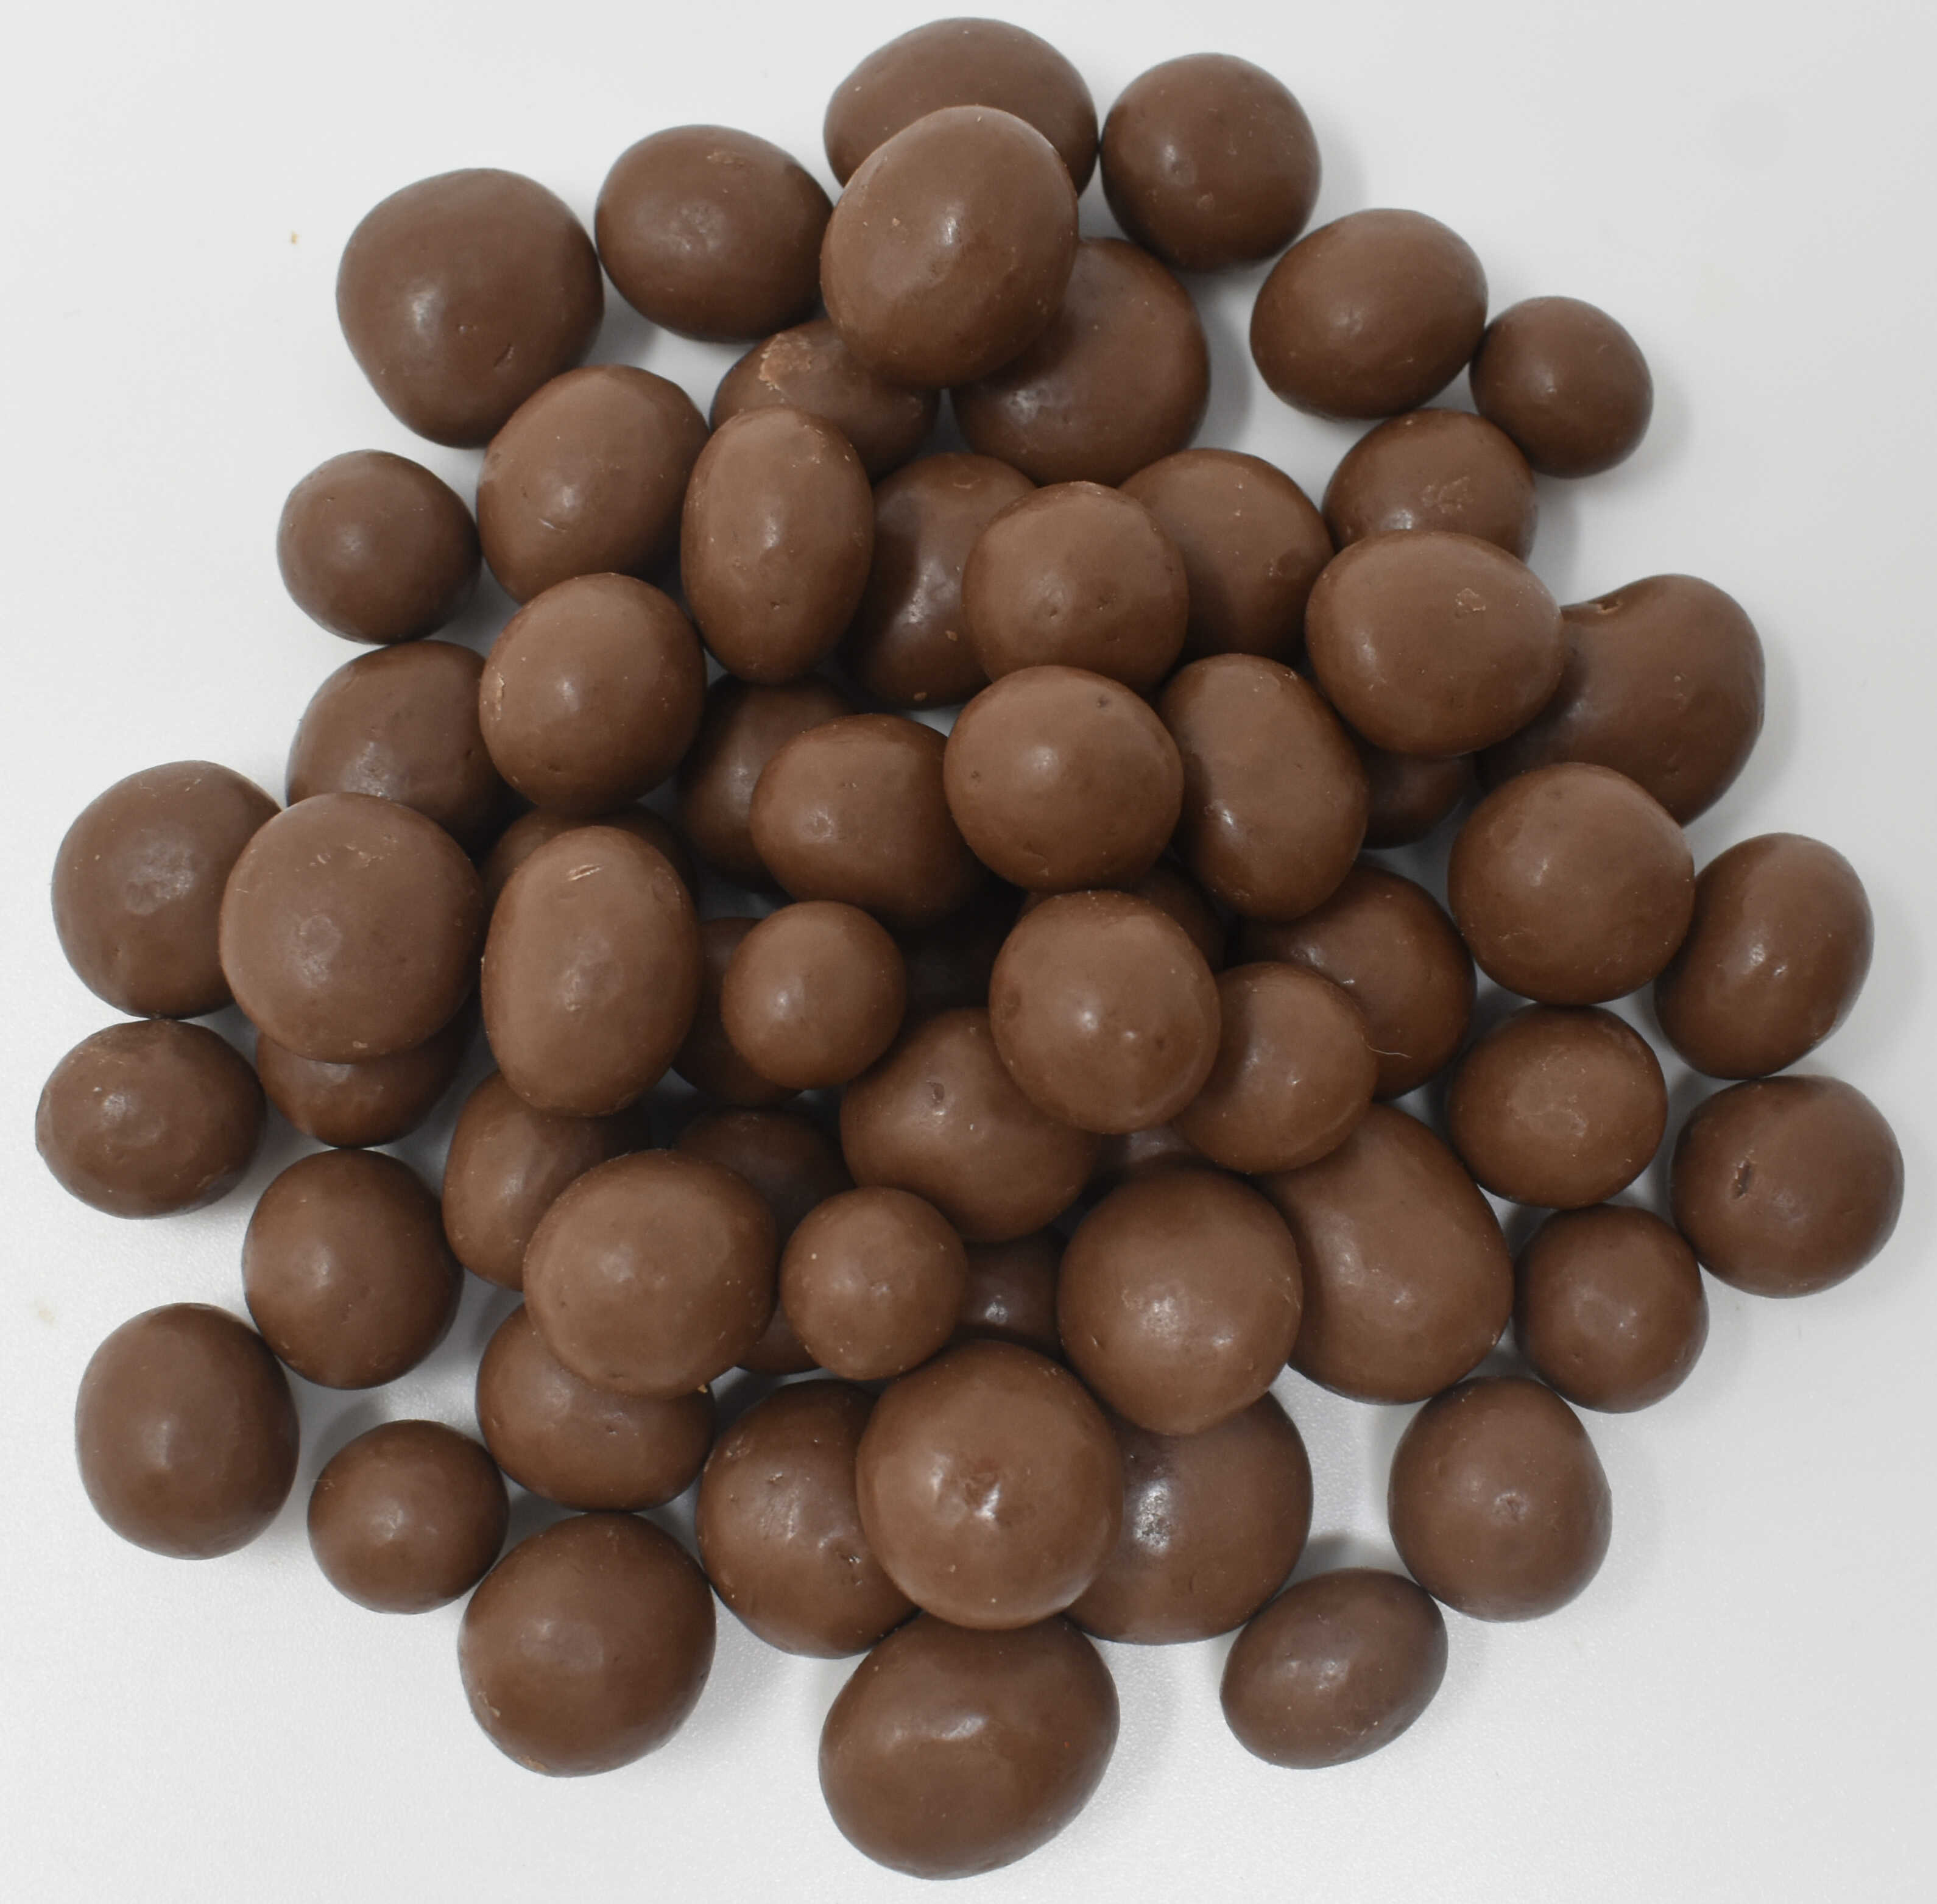 Chocolate Raisins - Top Photo